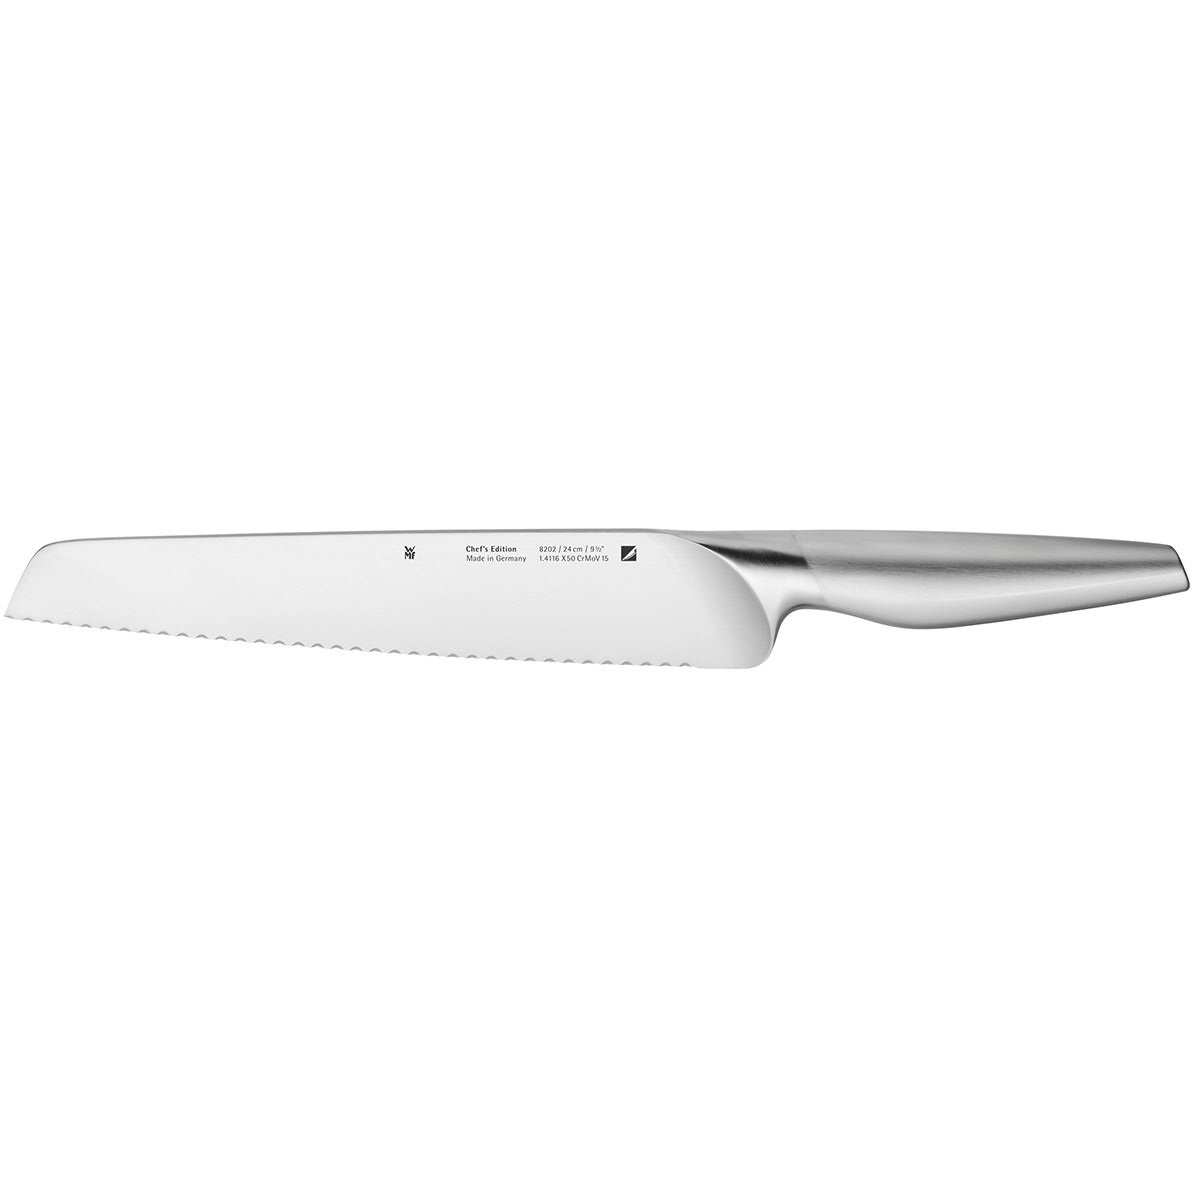 https://www.newformsdesign.com/images/prodotti/15904-10-chef-edition-coltello-pane-24cm-wmf.jpg